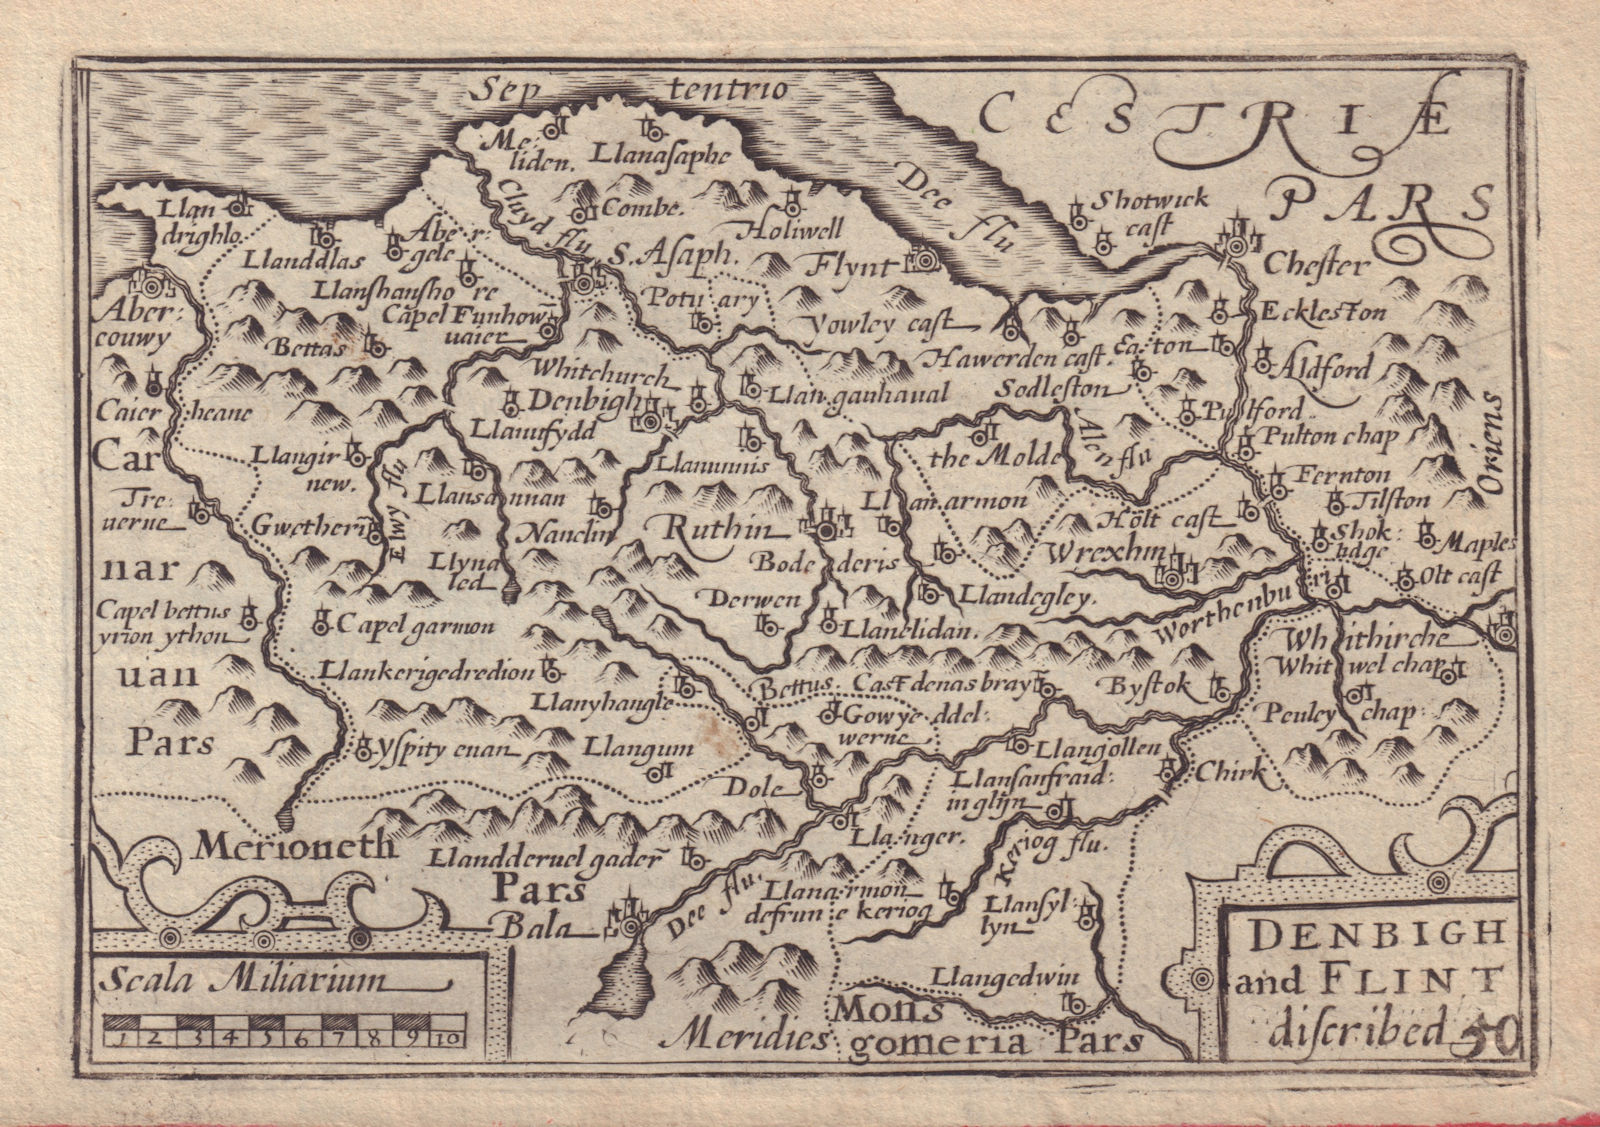 Associate Product Denbigh & Flint discribed by Keere. "Speed miniature" Northeast Wales 1632 map